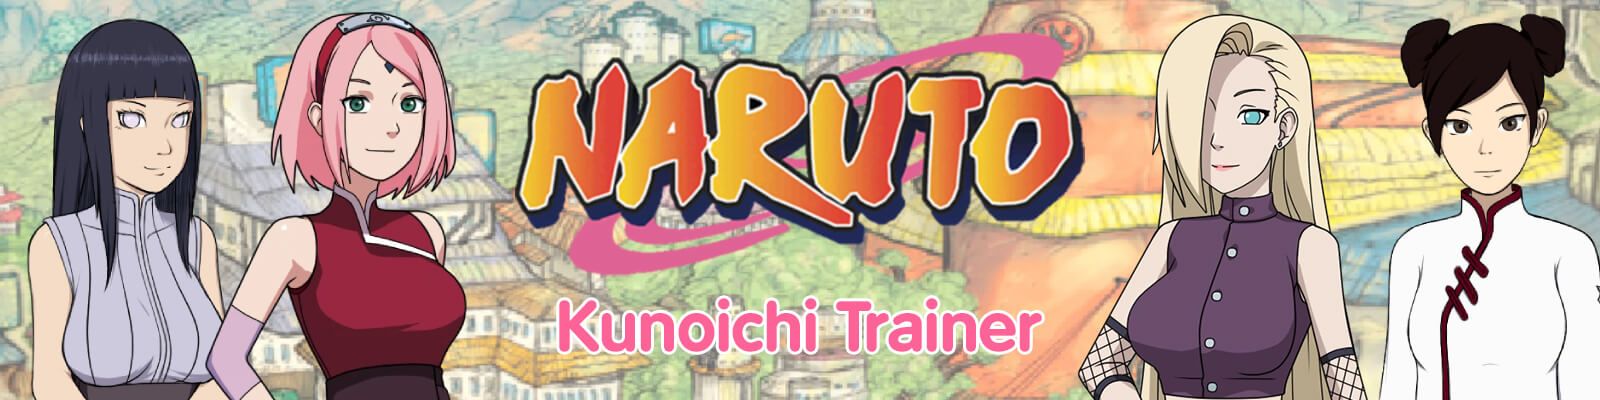 Naruto: Kunoichi Trainer [v0.18.1]